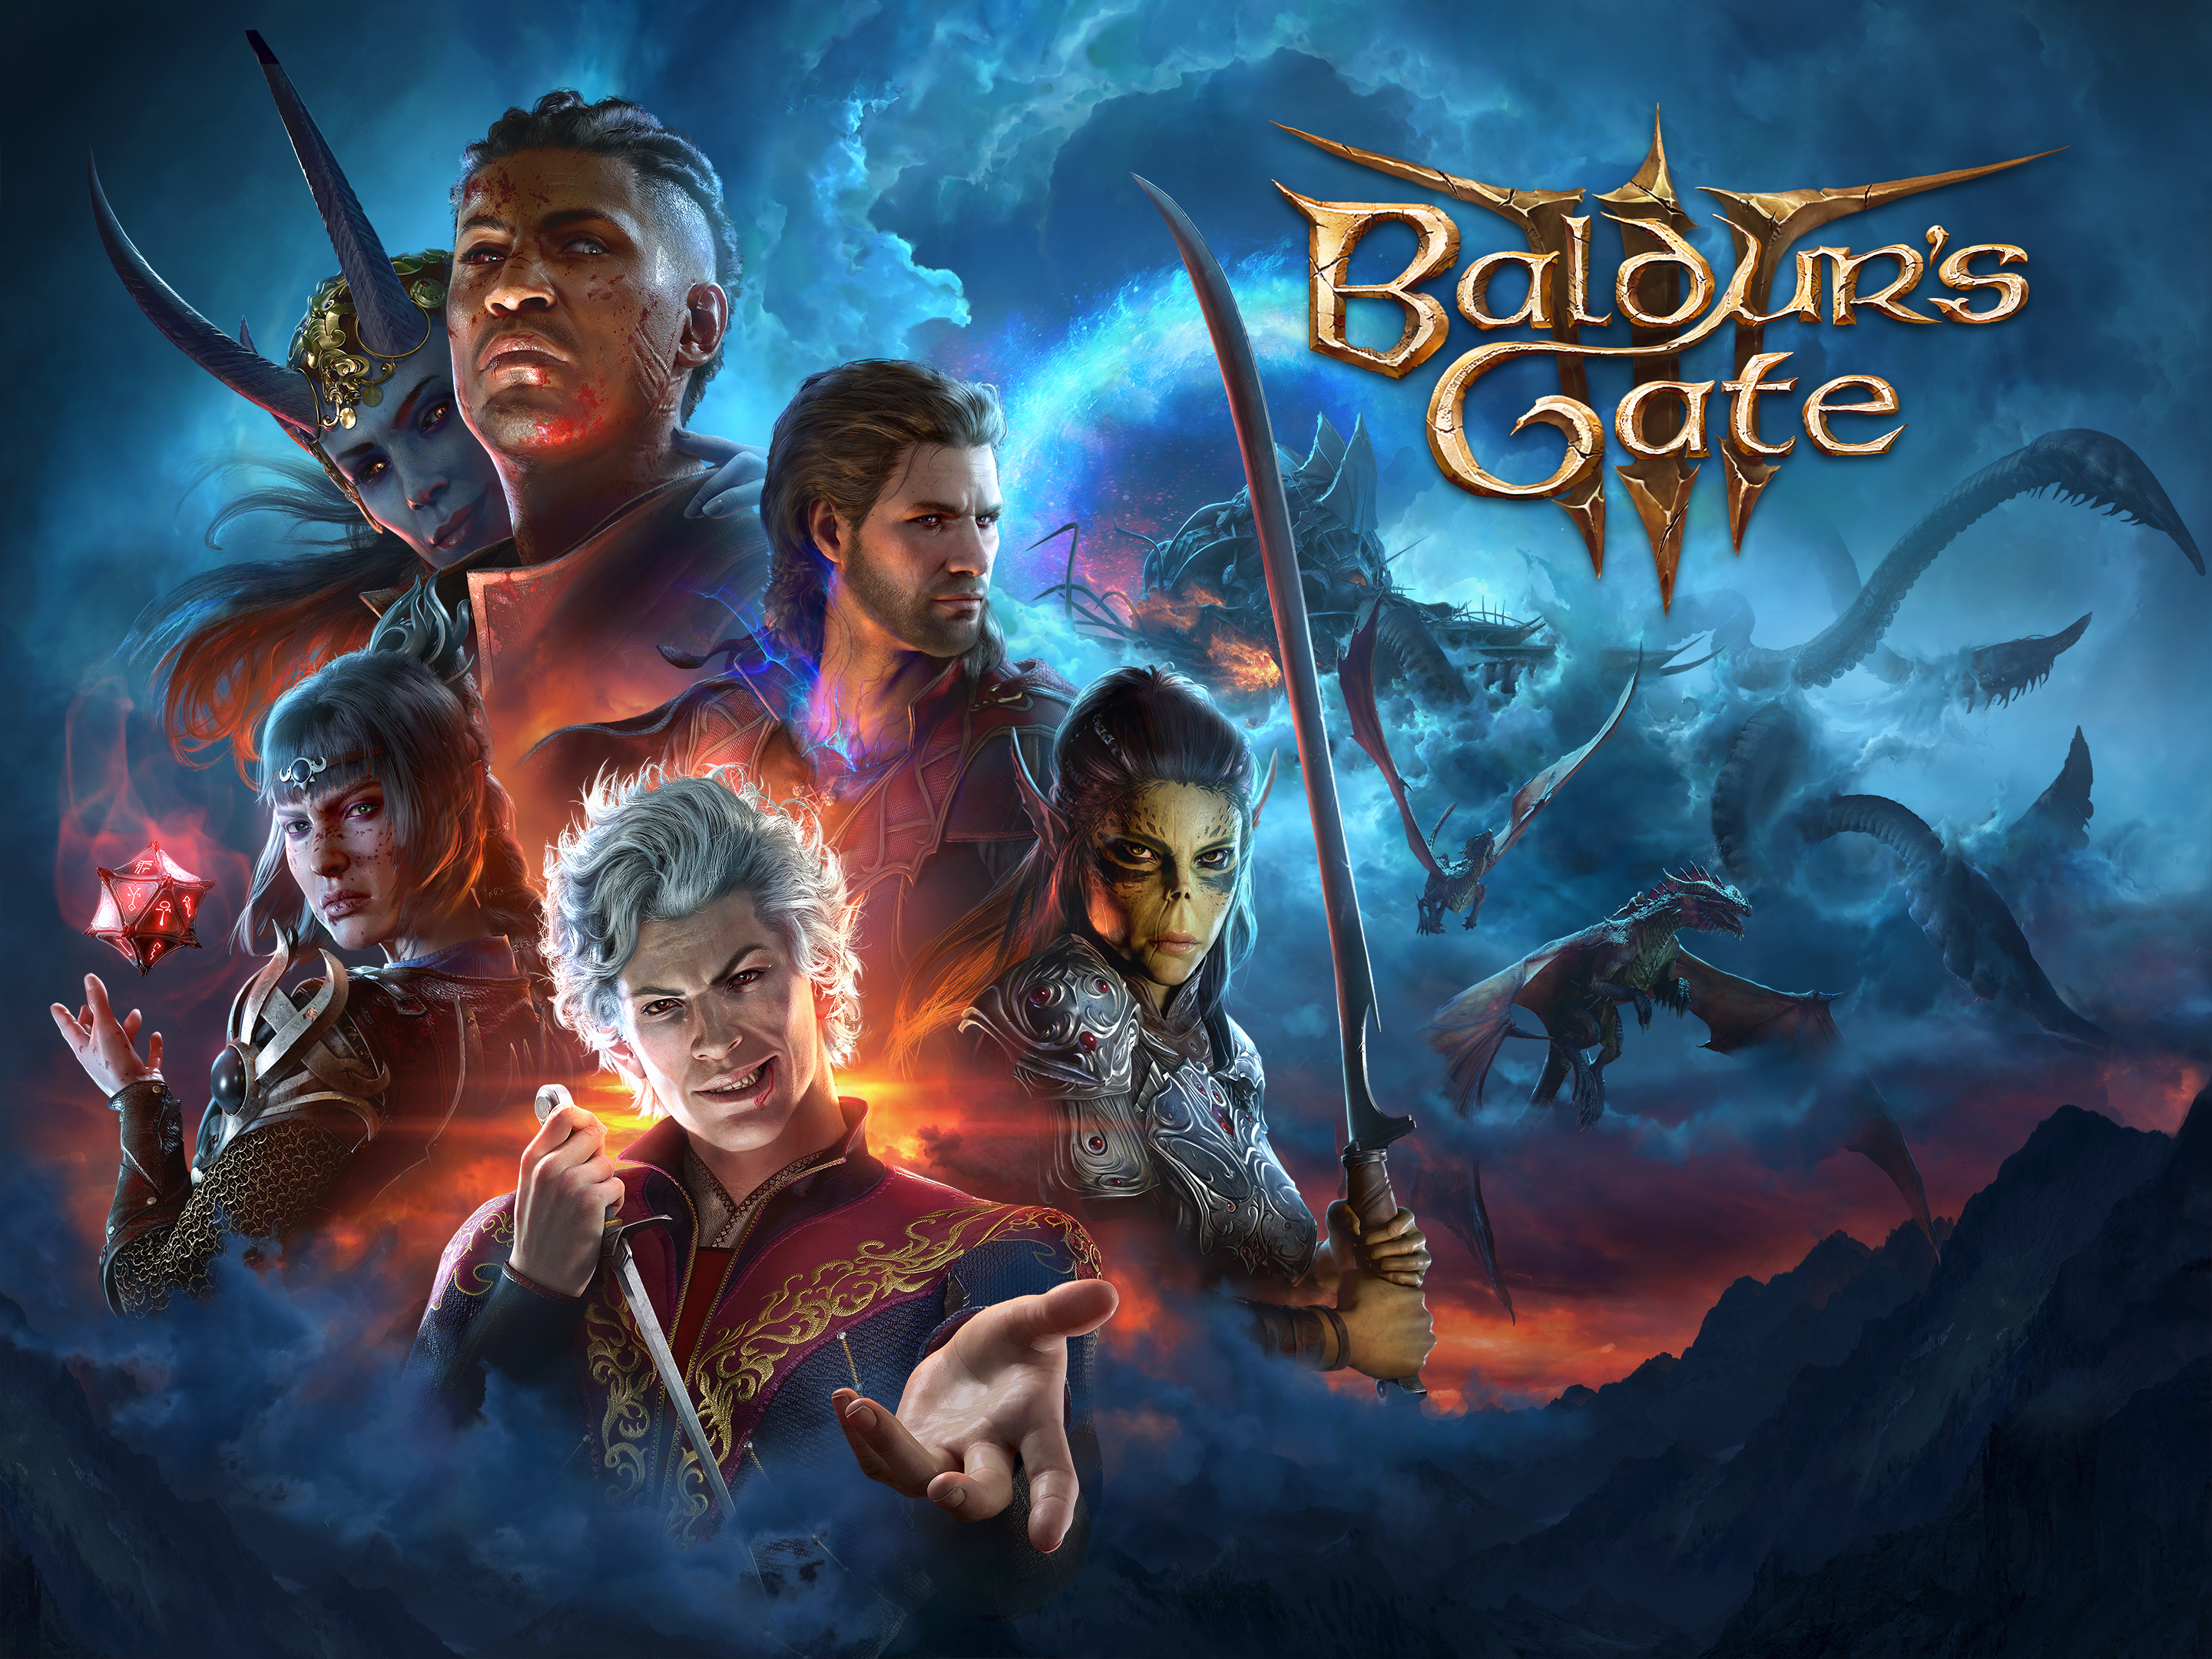 Baldur's Gate 3 HD Wallpaper and Background